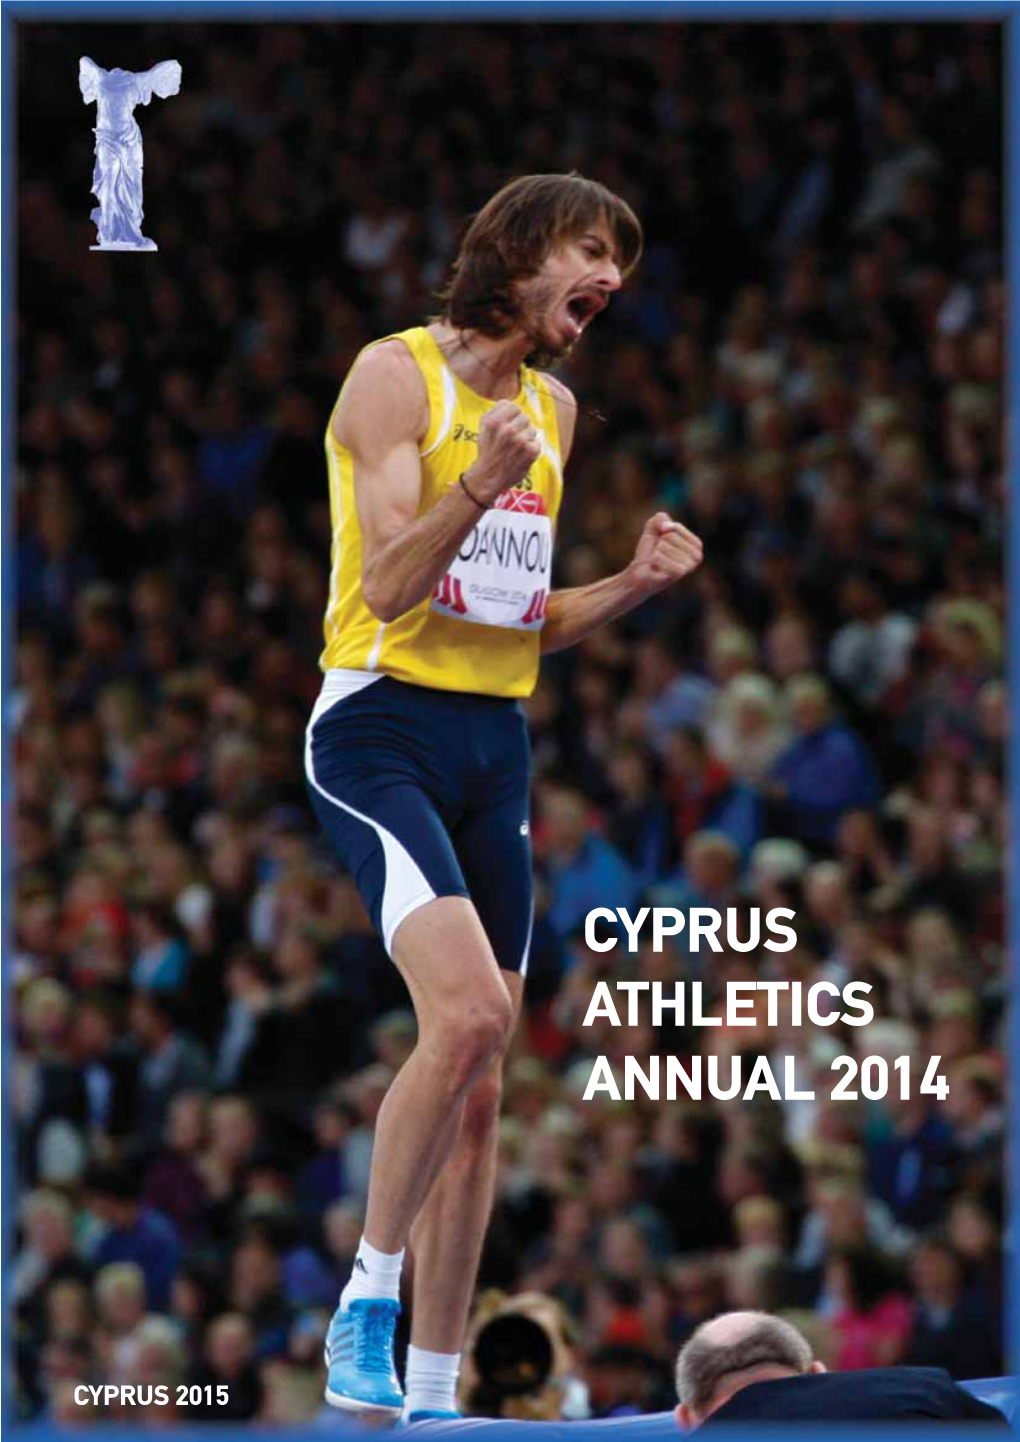 Cyprus Athletics Annual 2014